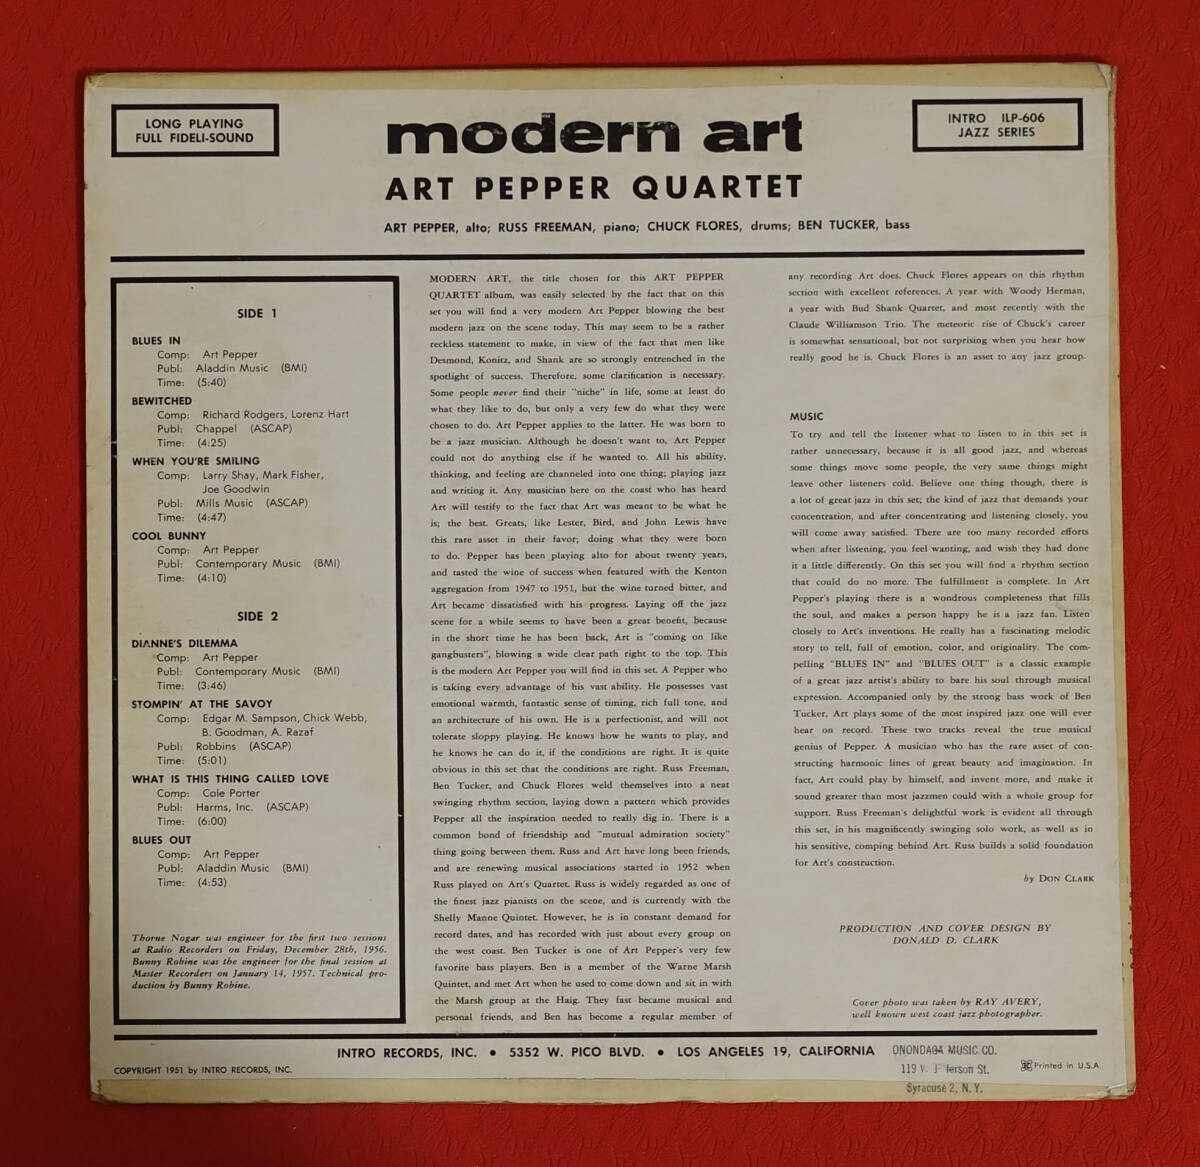 US INTRO ILP 606 完全オリジナル MODERN ART / Art Pepper Quartet DG/Flat Edge_画像2